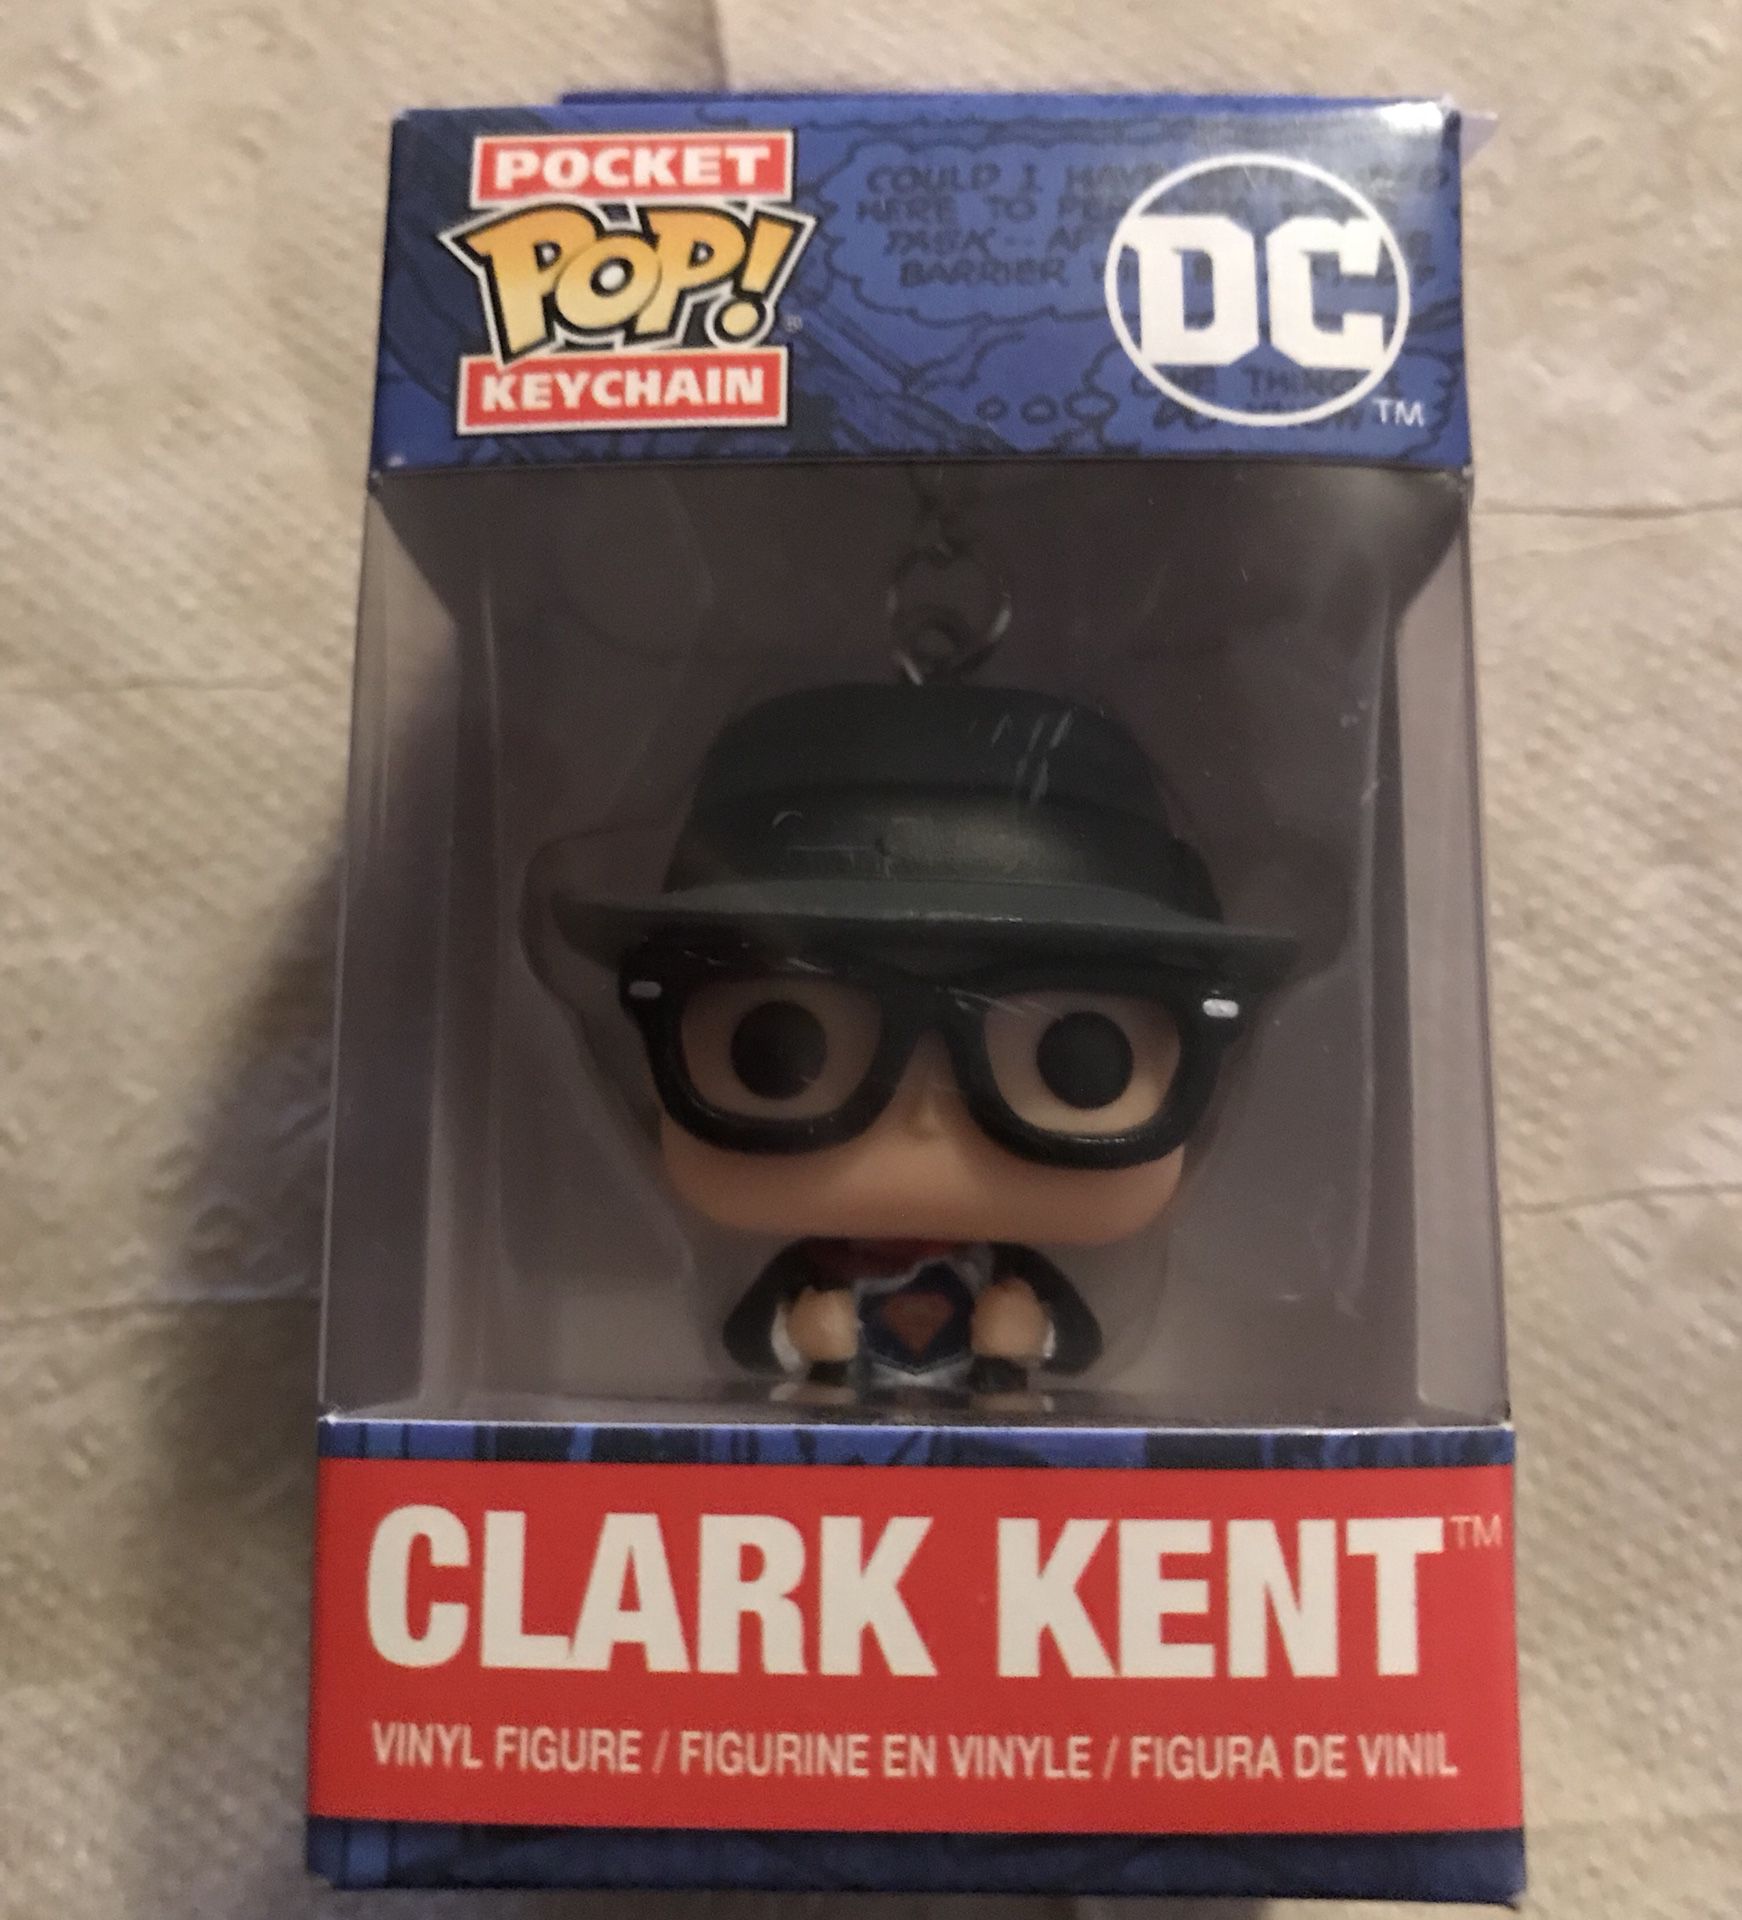 Clark Kent keychain